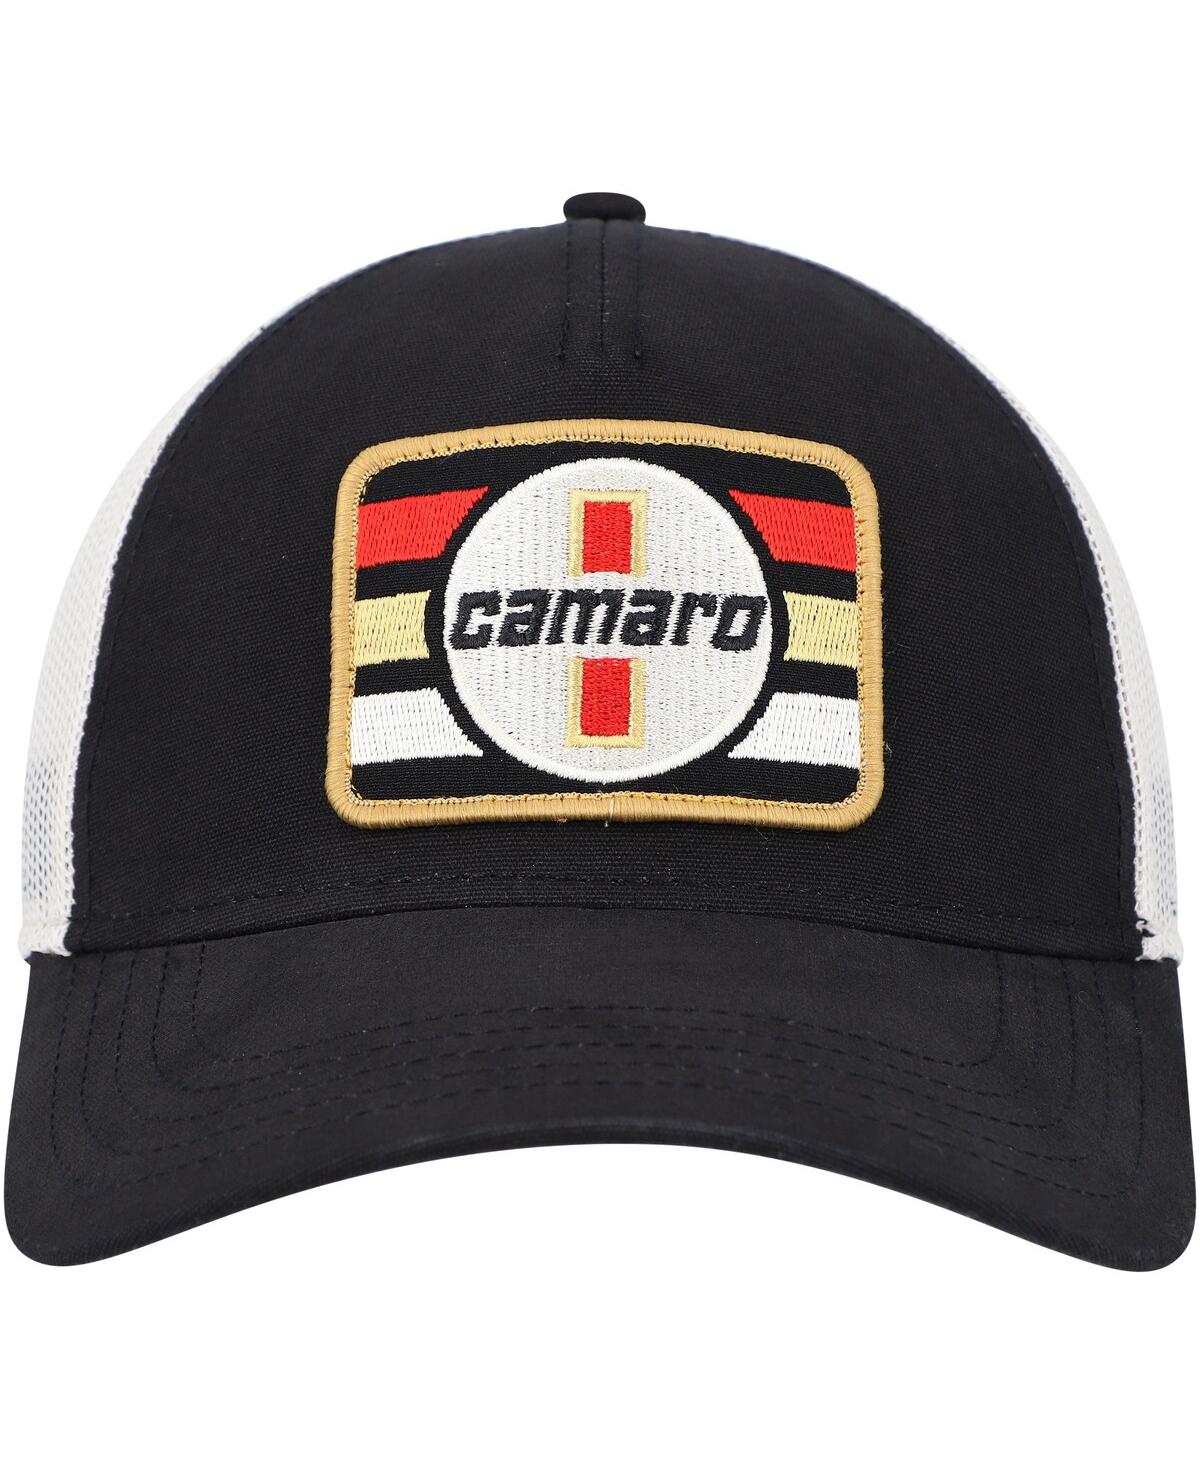 Shop American Needle Men's  Black Camaro Twill Valin Patch Snapback Hat